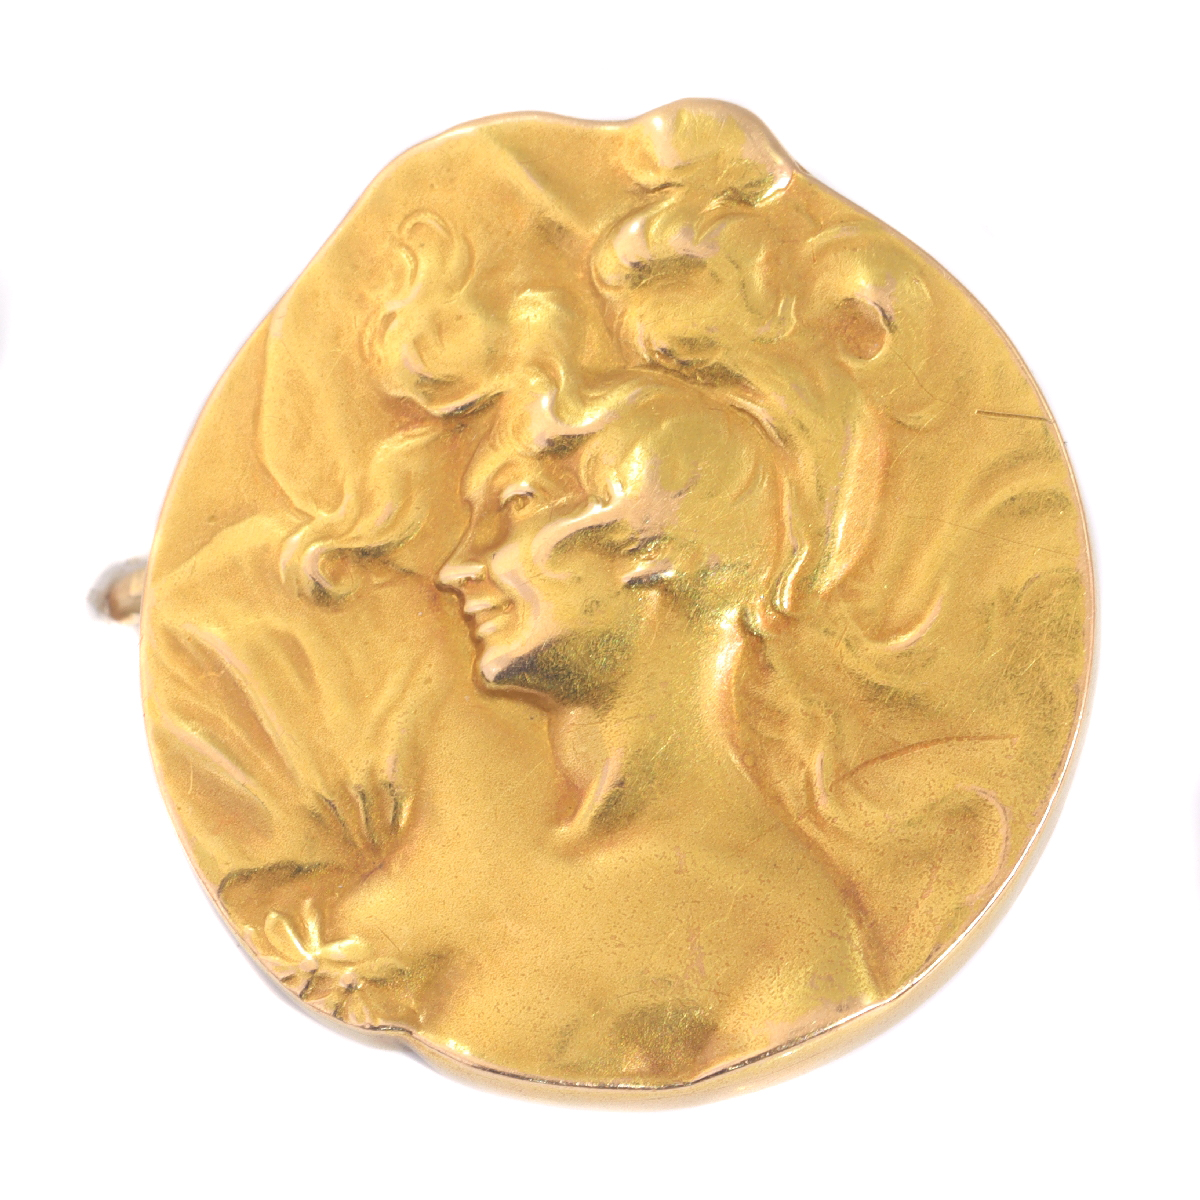 Strong stylistic Art Nouveau gold brooch